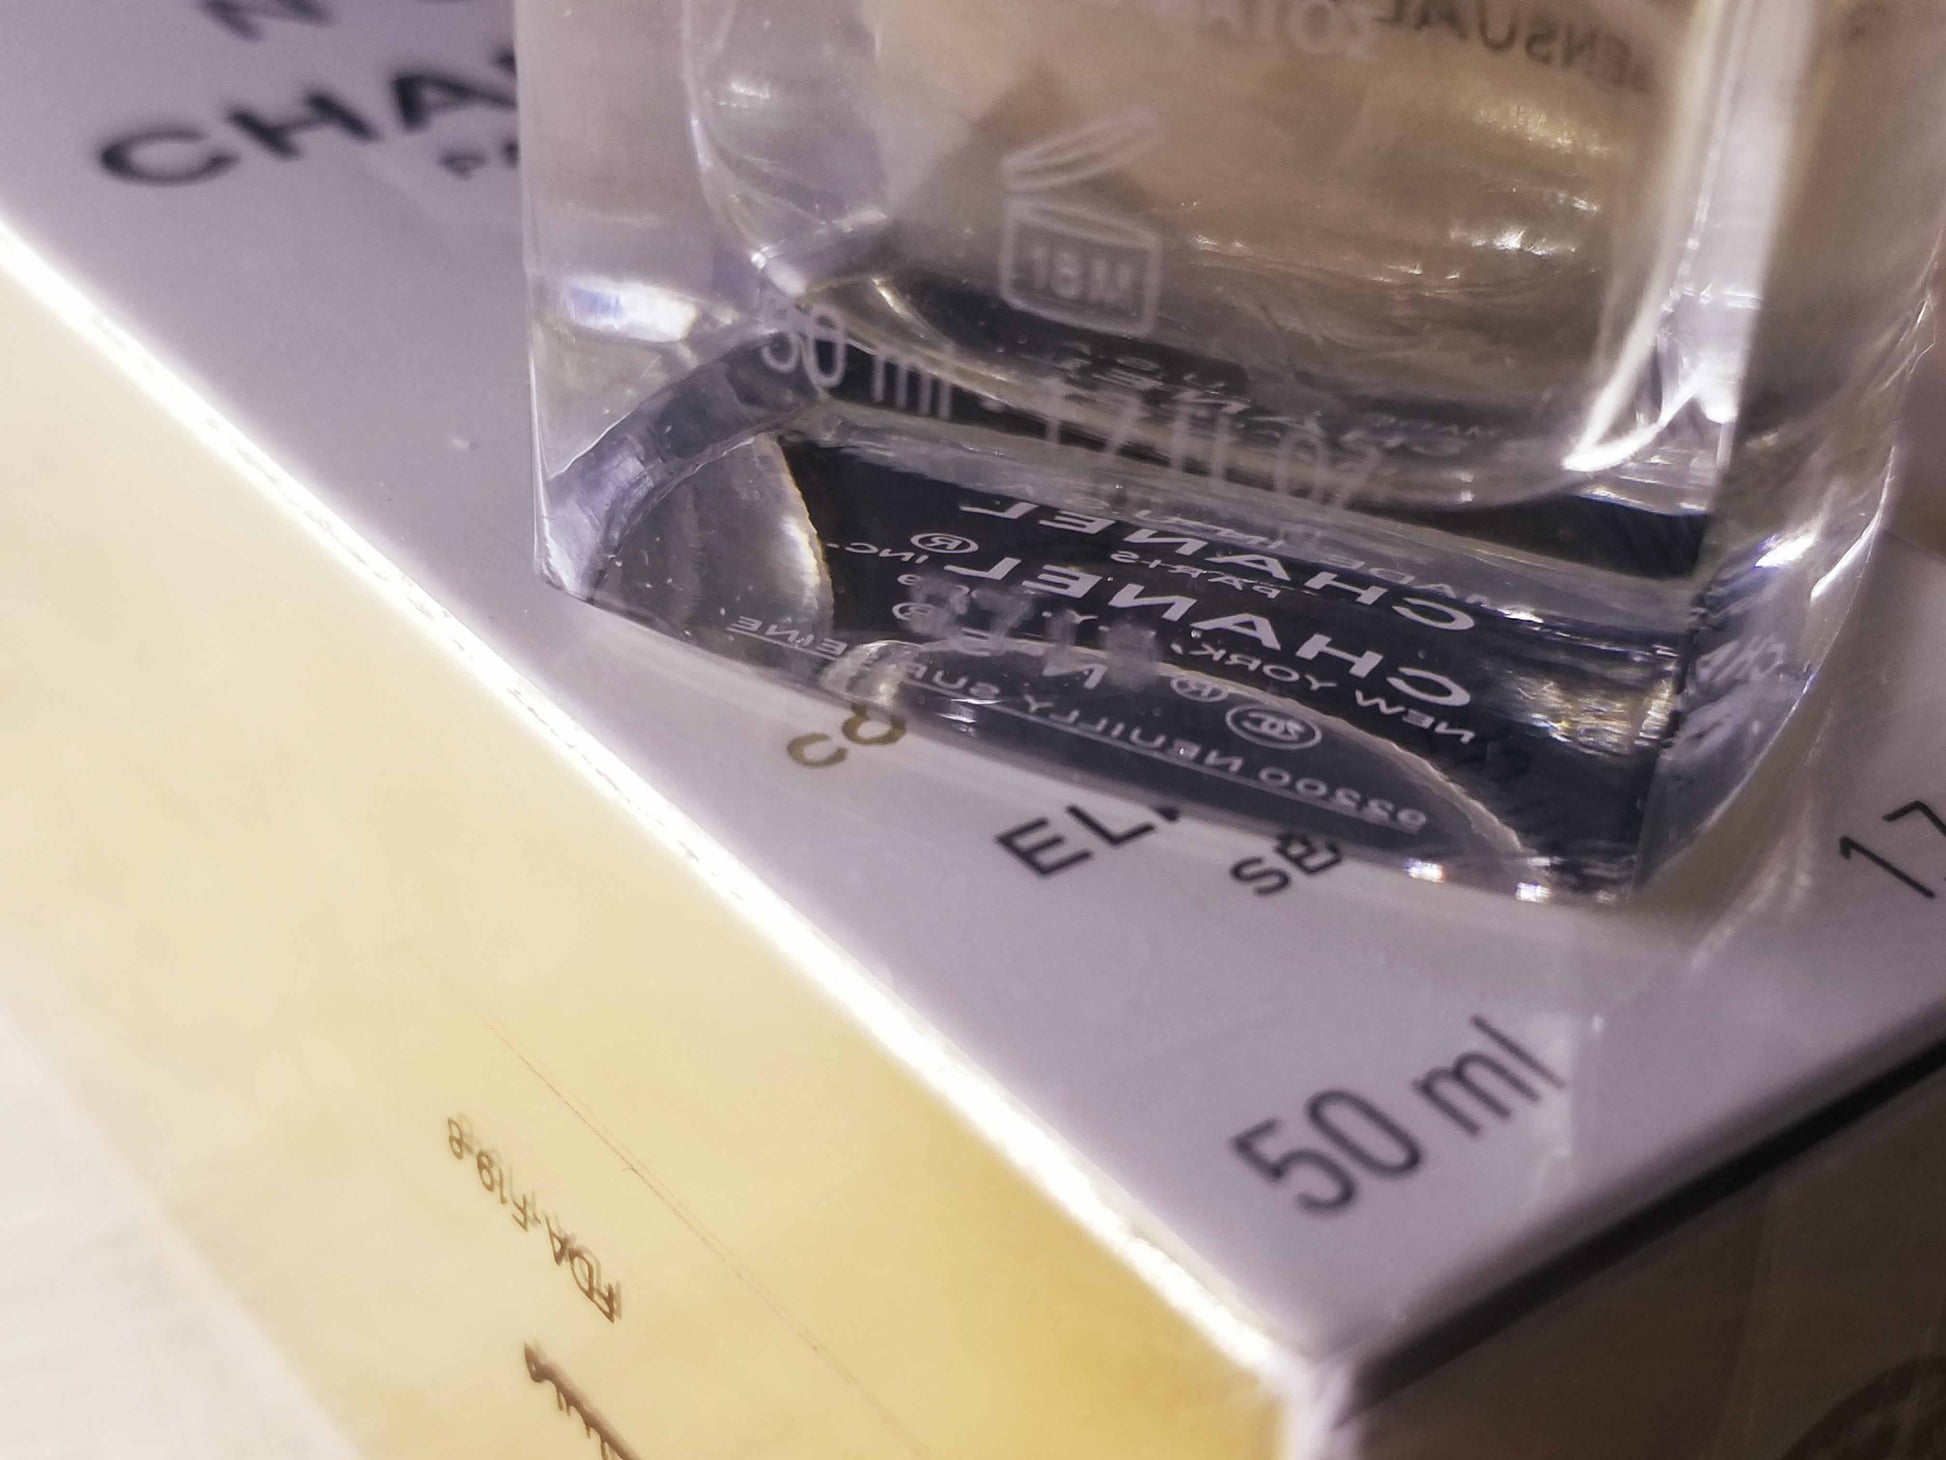 Chanel N5 Elixir Sensuel for women Fluid Body Gel 50 ml 1.7 oz, Vintag –  Perfumani